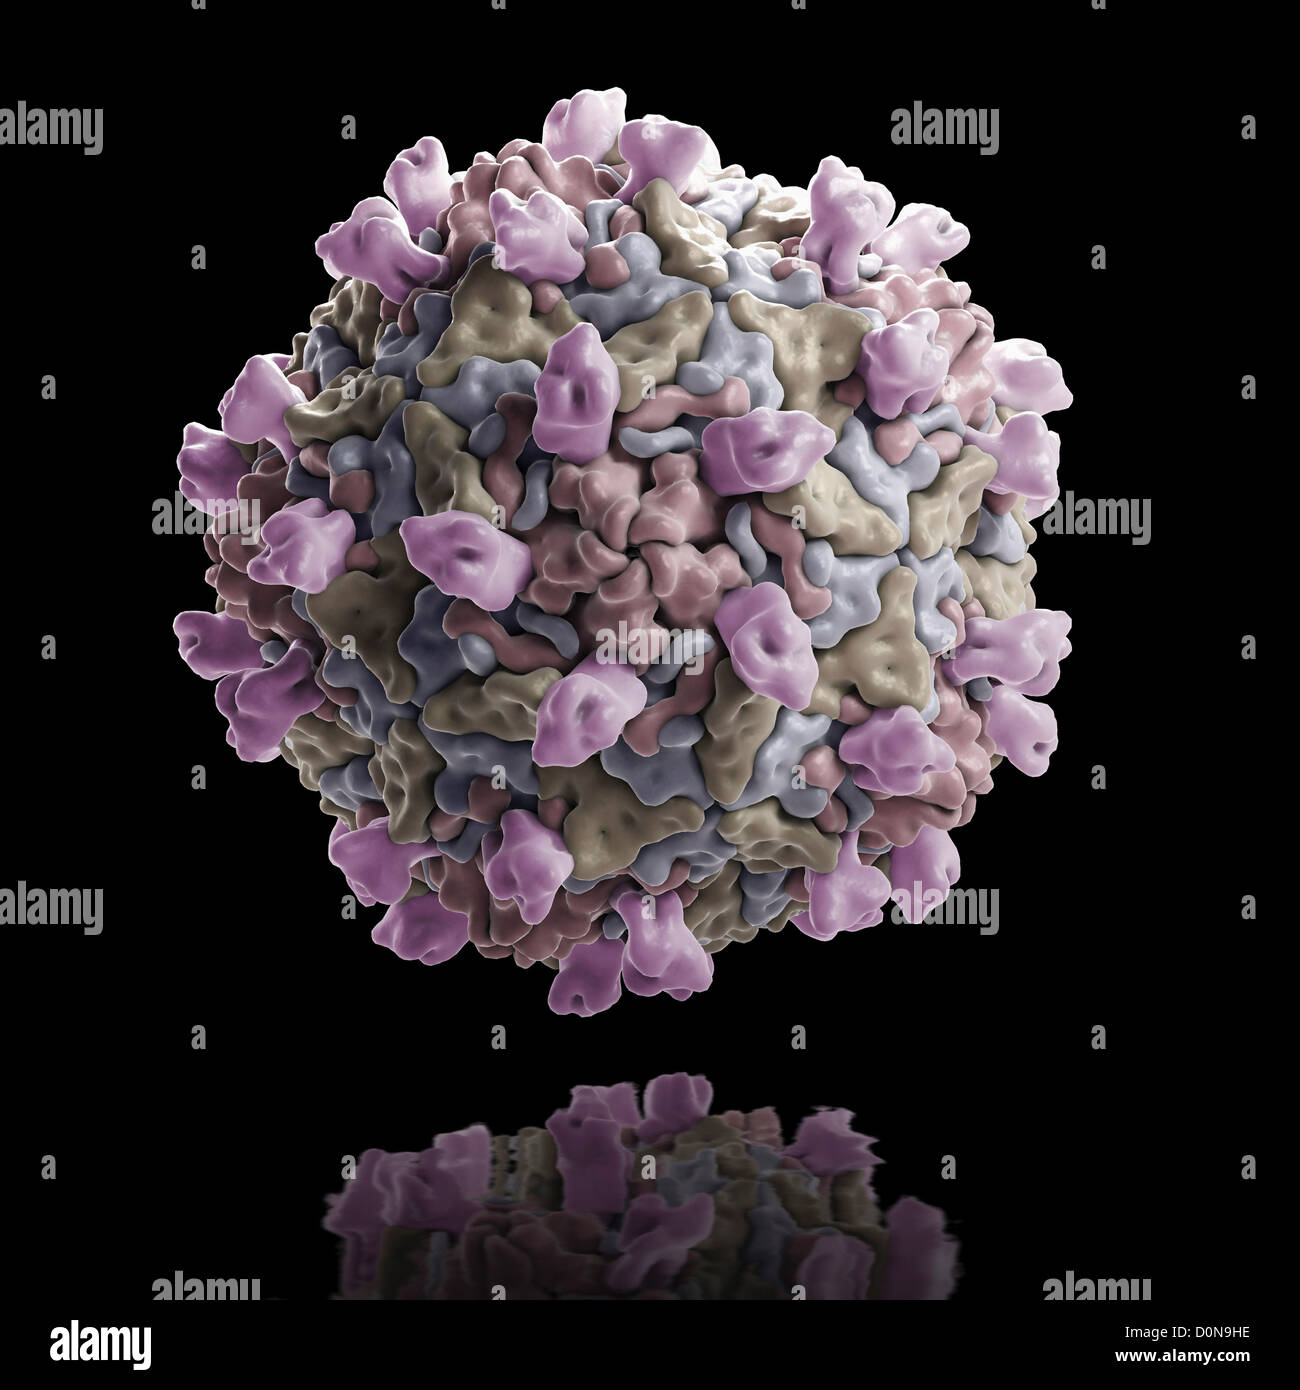 Cryo-em estructura el virus Coxsackie del grupo B m strain es receptor celular (PDB 1judío). Los virus coxsackie del grupo B suelen infectar el corazón Foto de stock